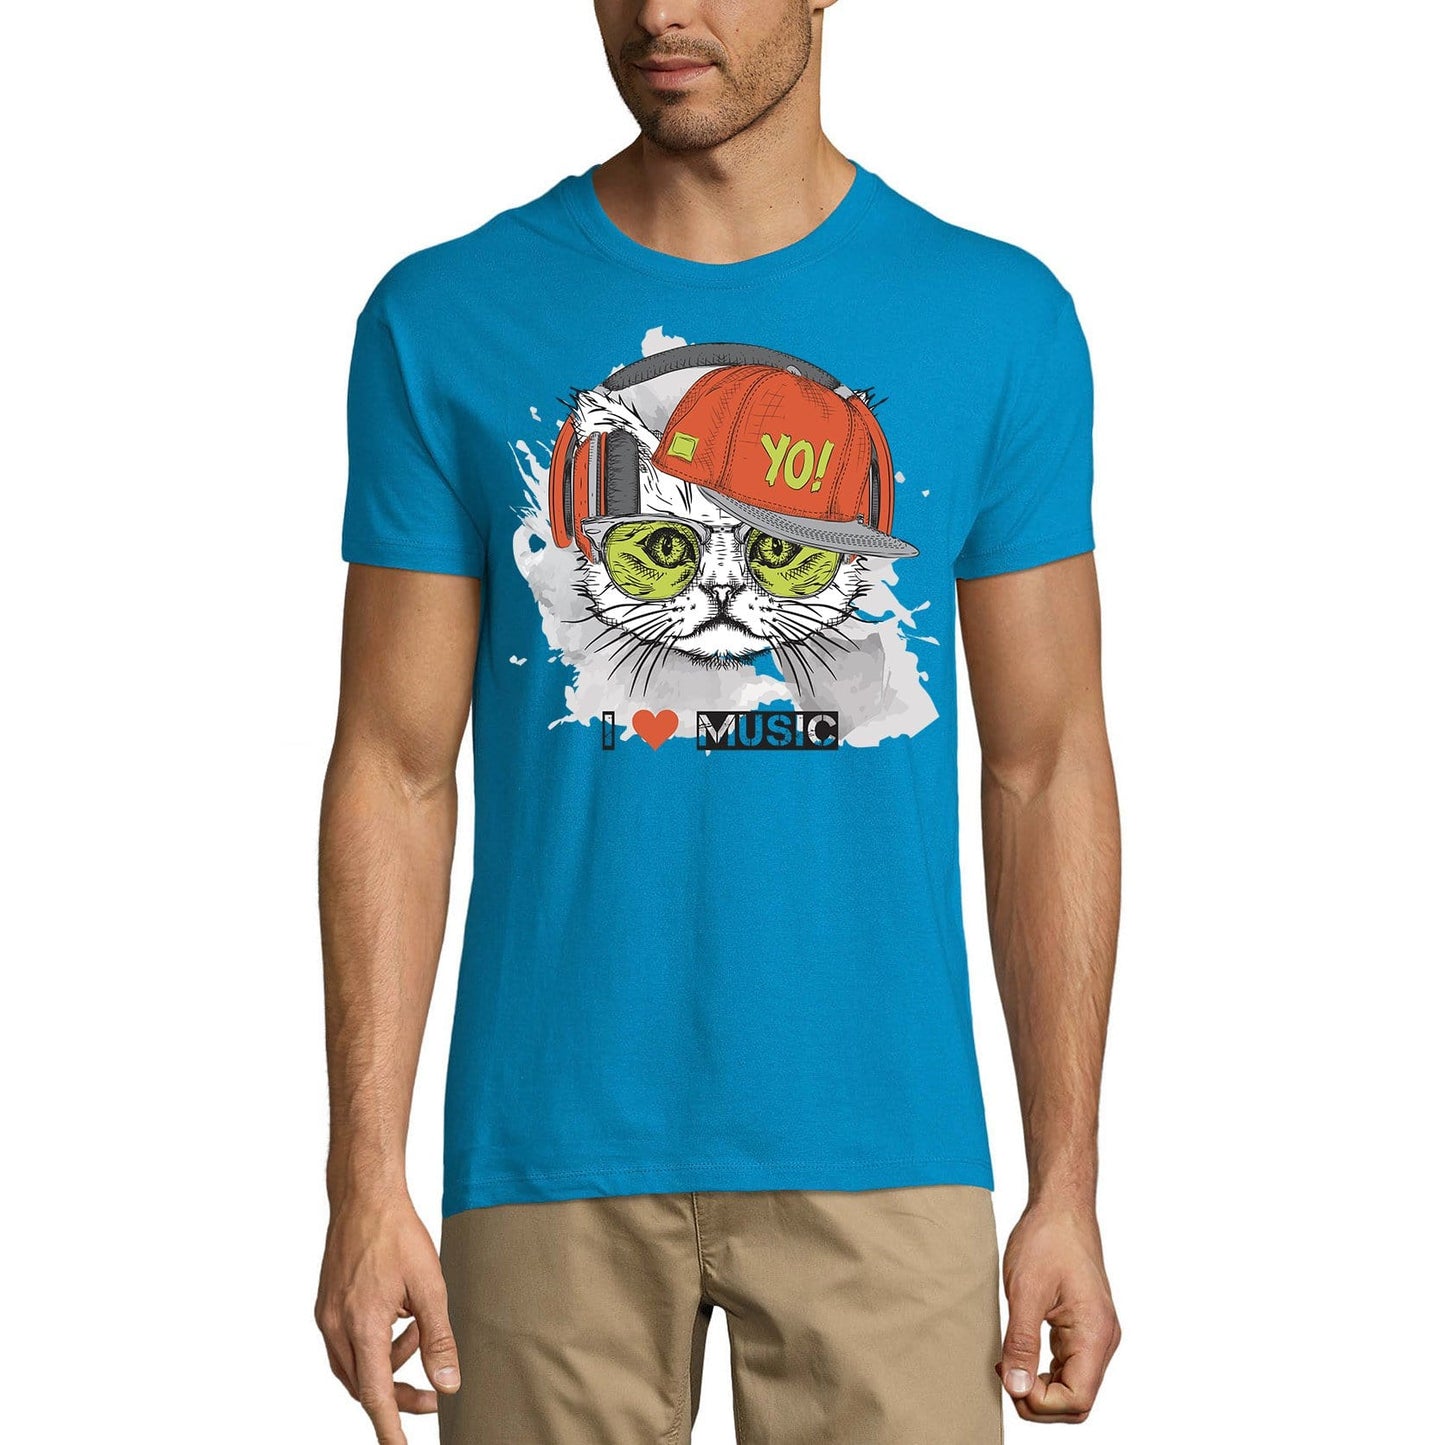 ULTRABASIC Men's Novelty T-Shirt Cool Cat - I Love Music Funny Tee Shirt